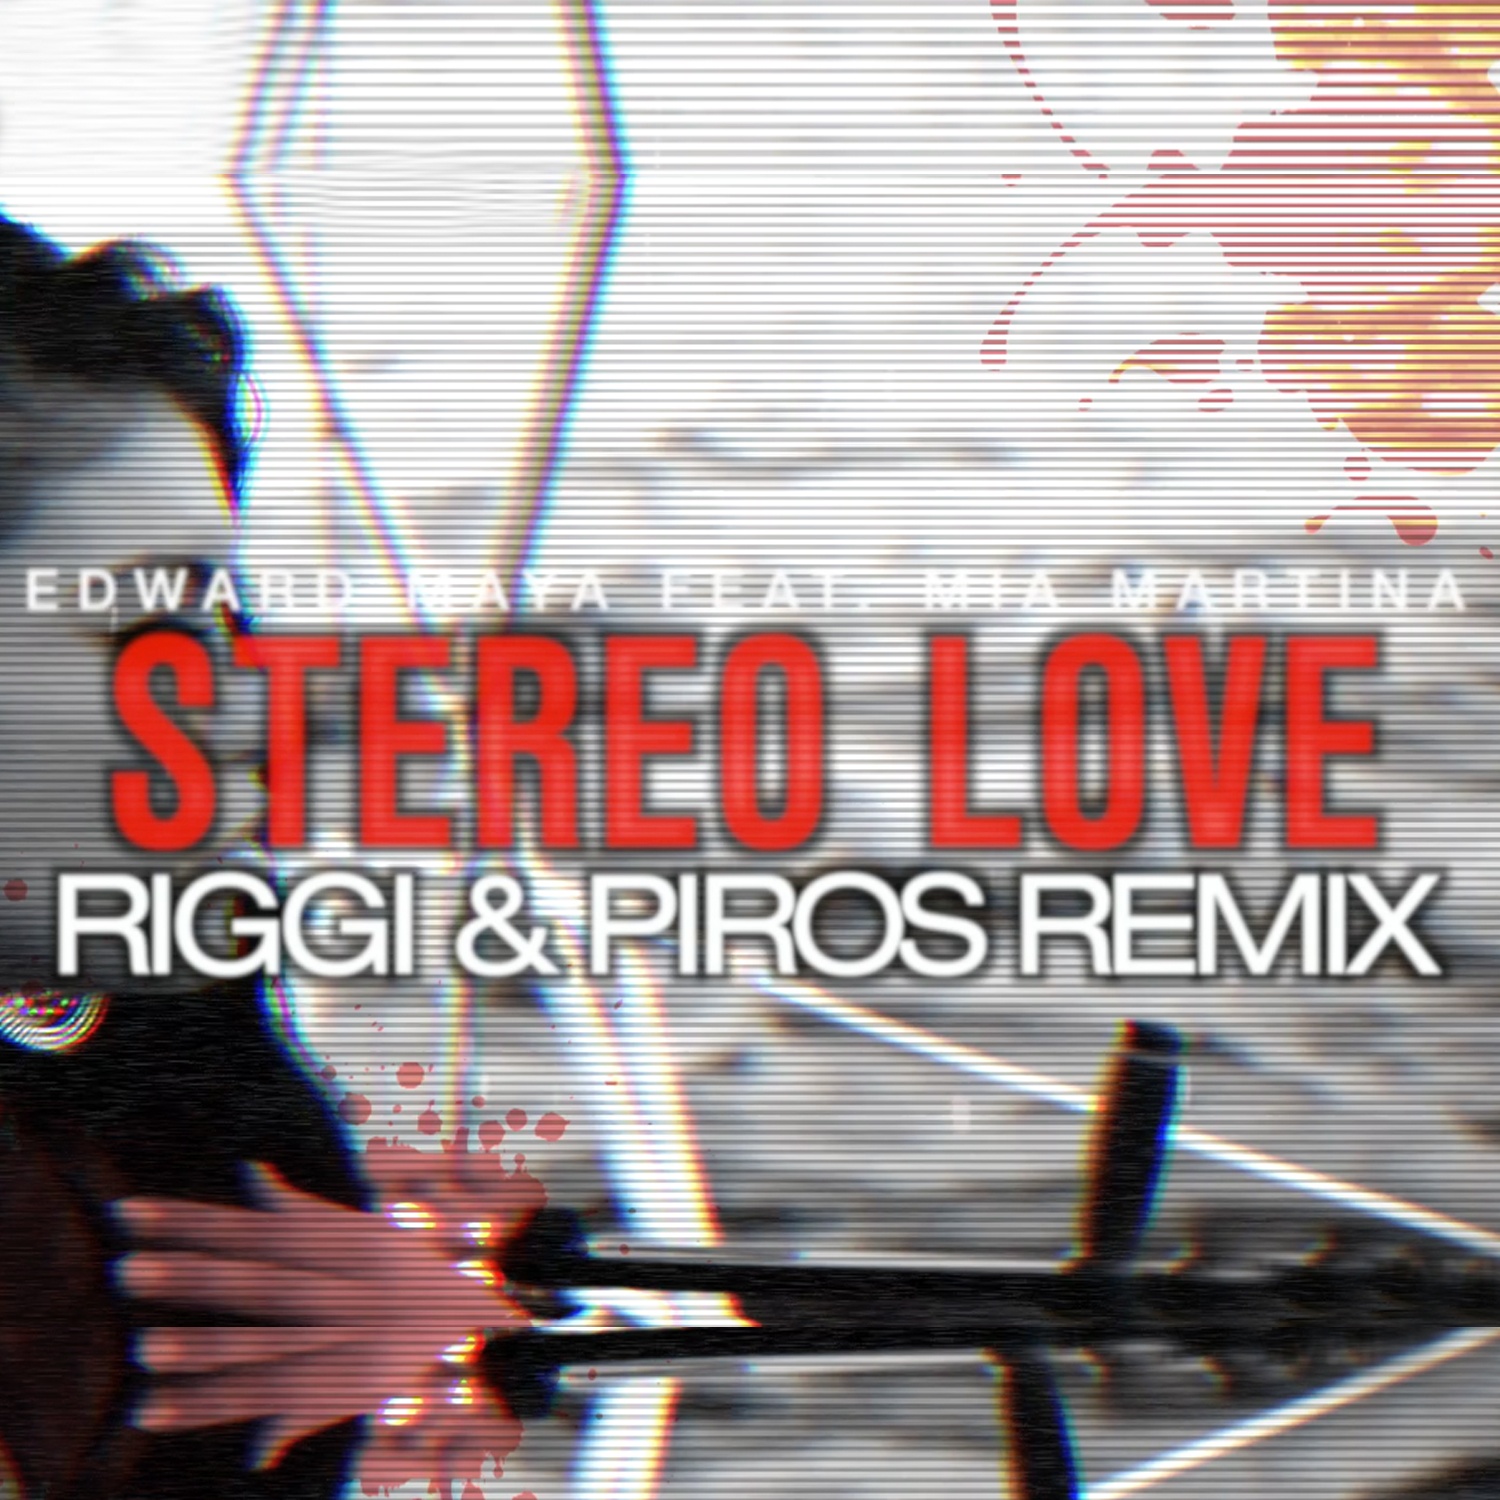 Stereo Love (Riggi & Piros Remix)